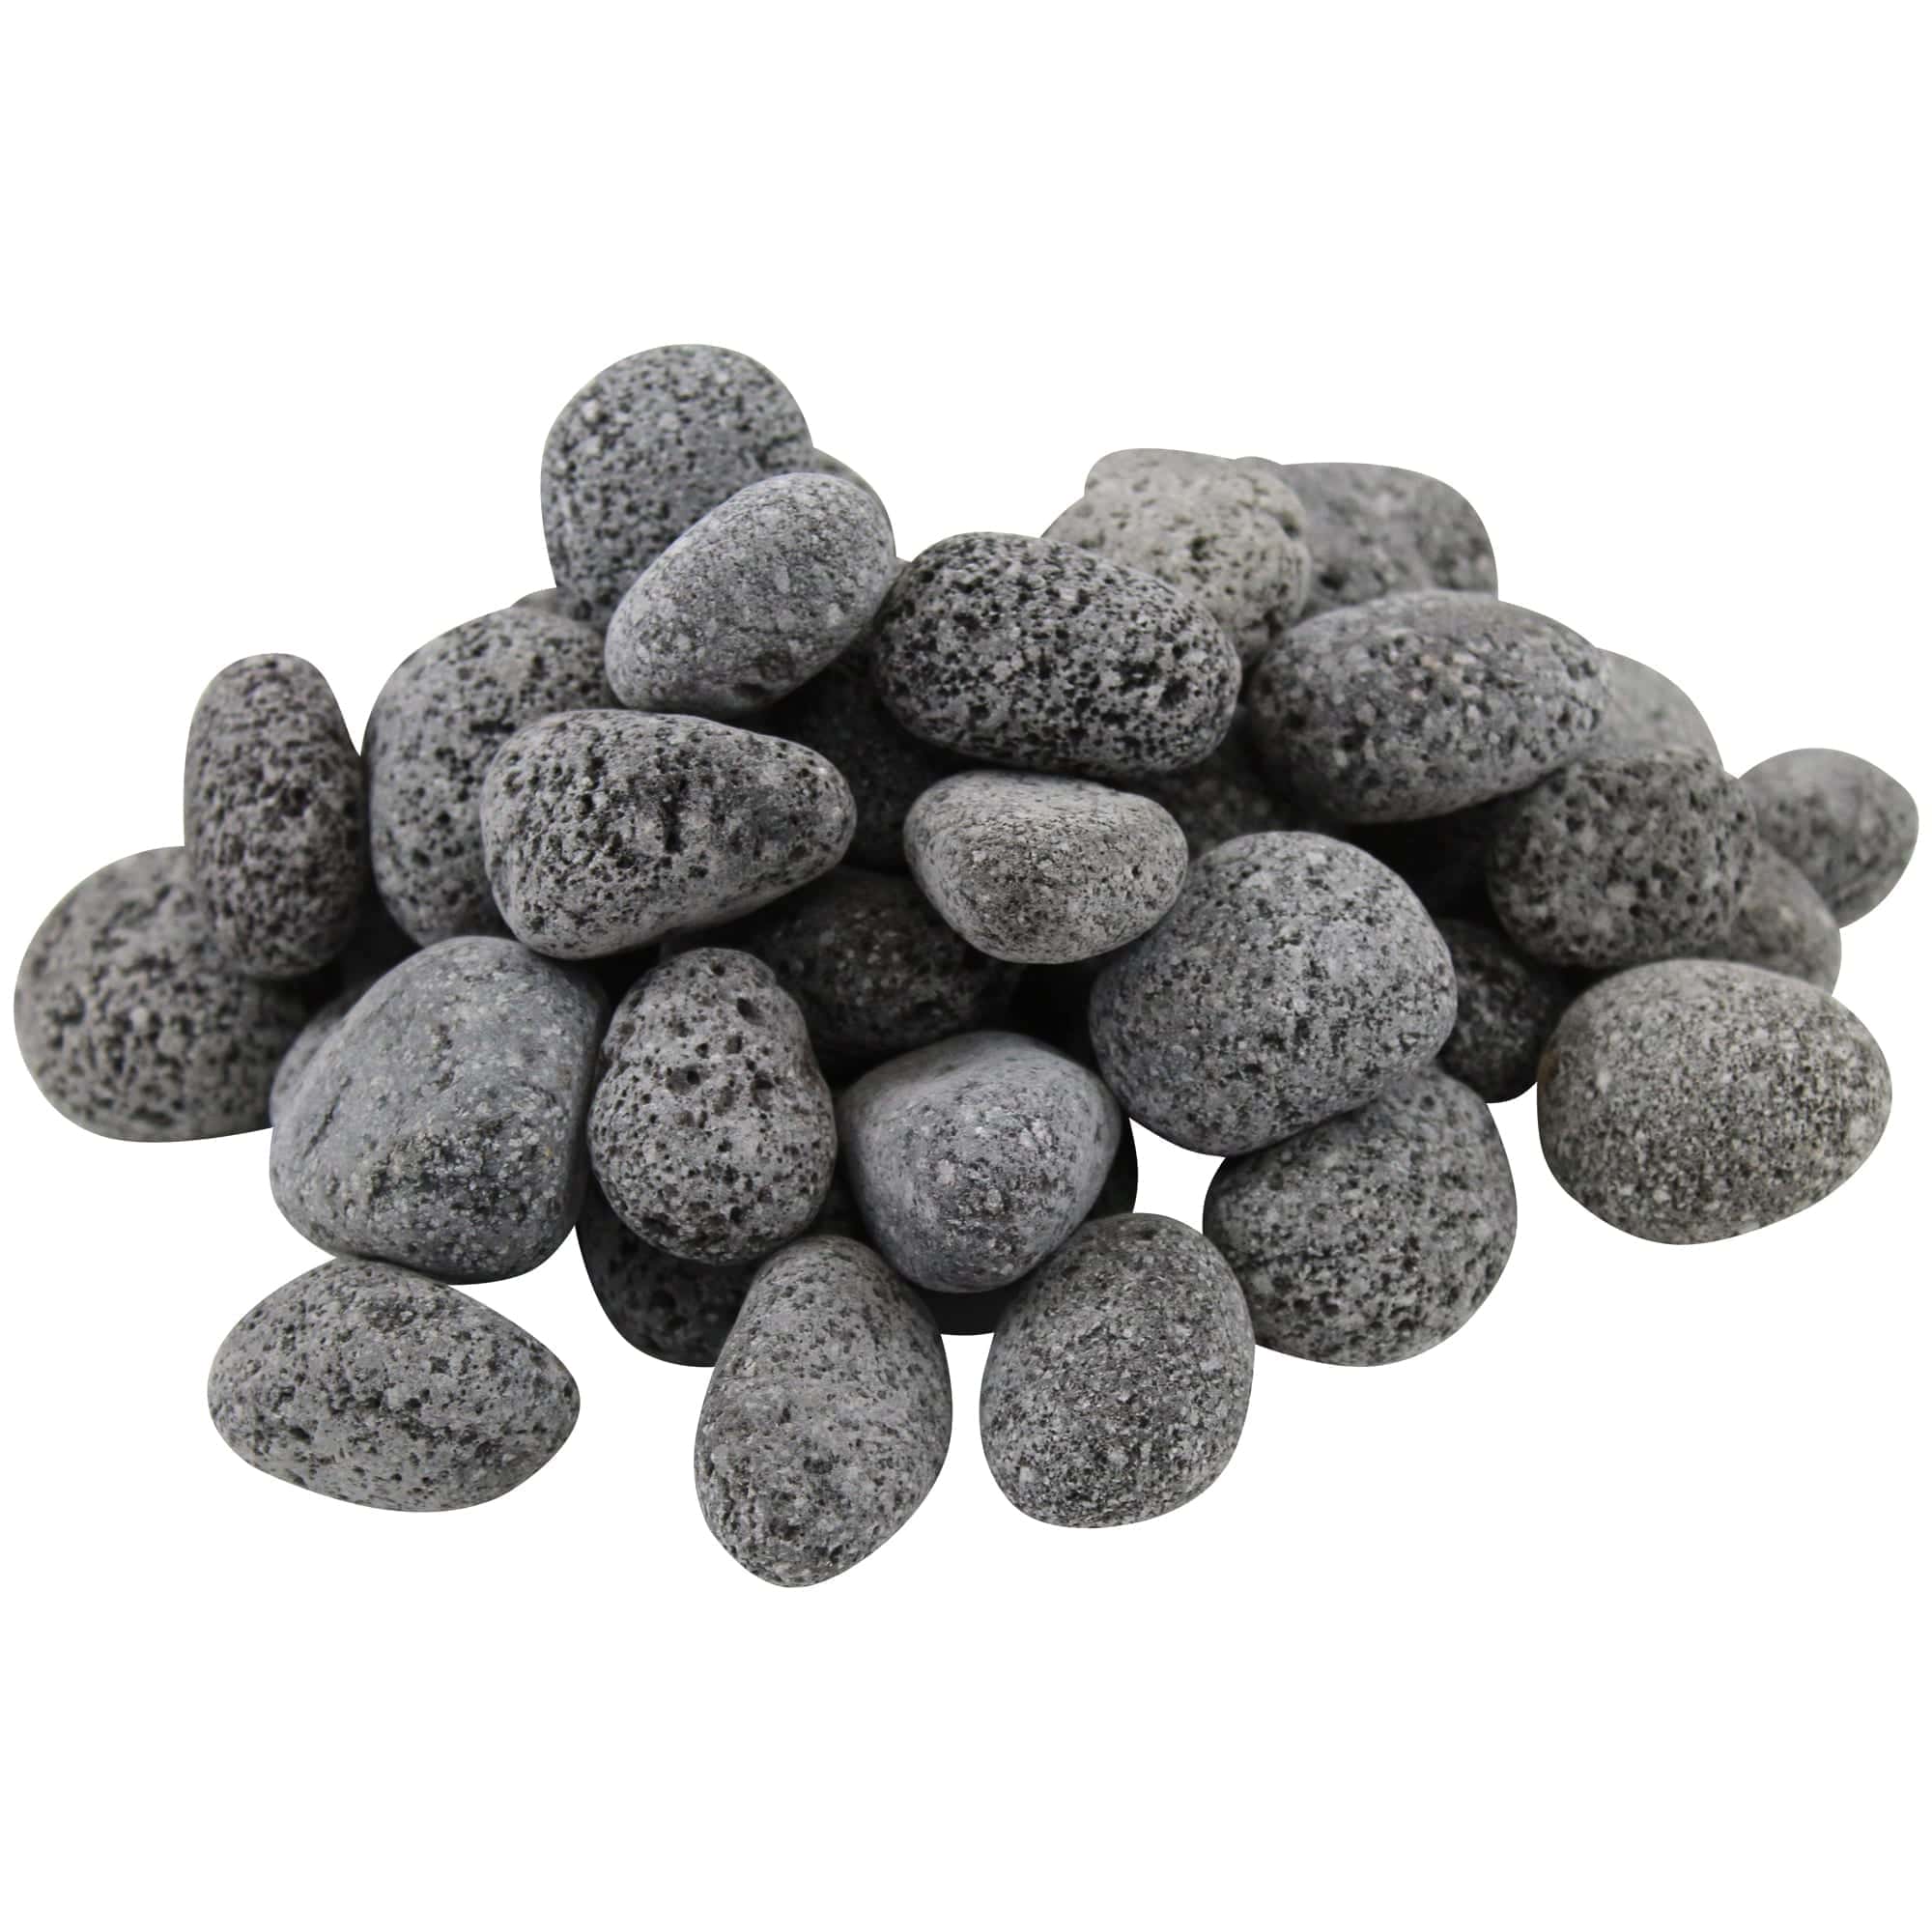 Black Lava Pebbles